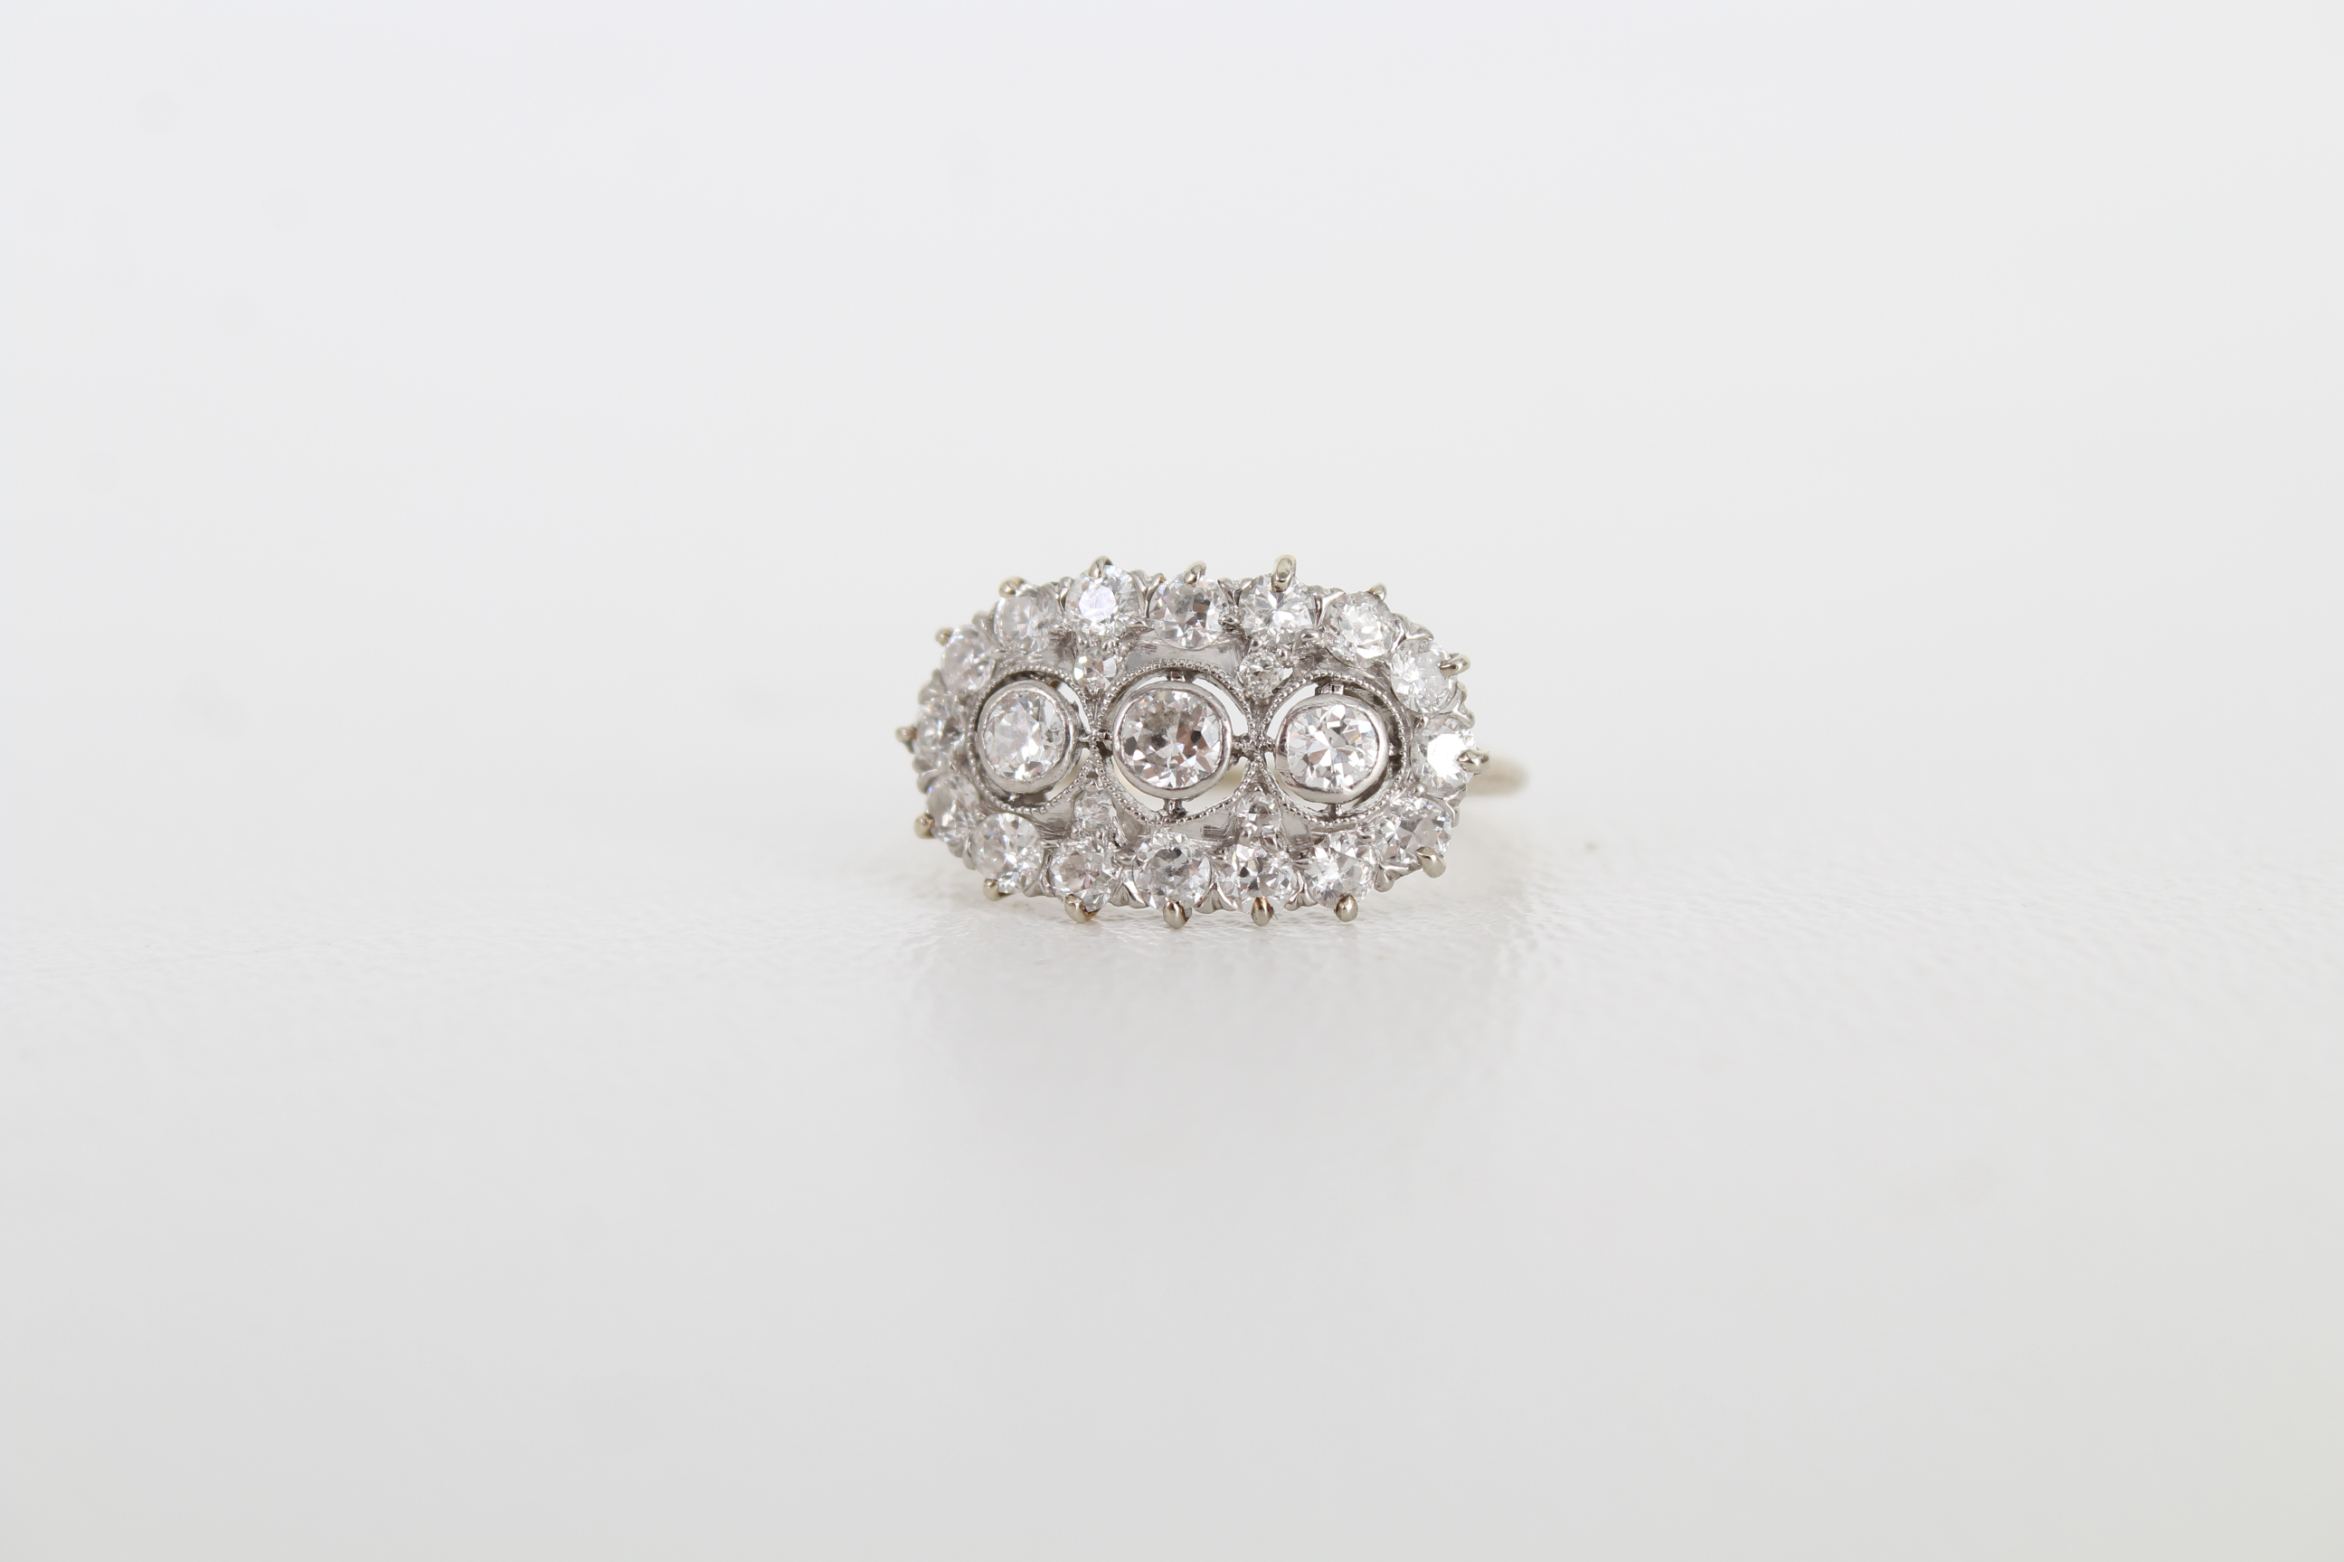 Multi-Stone Victorian Style Diamond Ring - Image 2 of 7